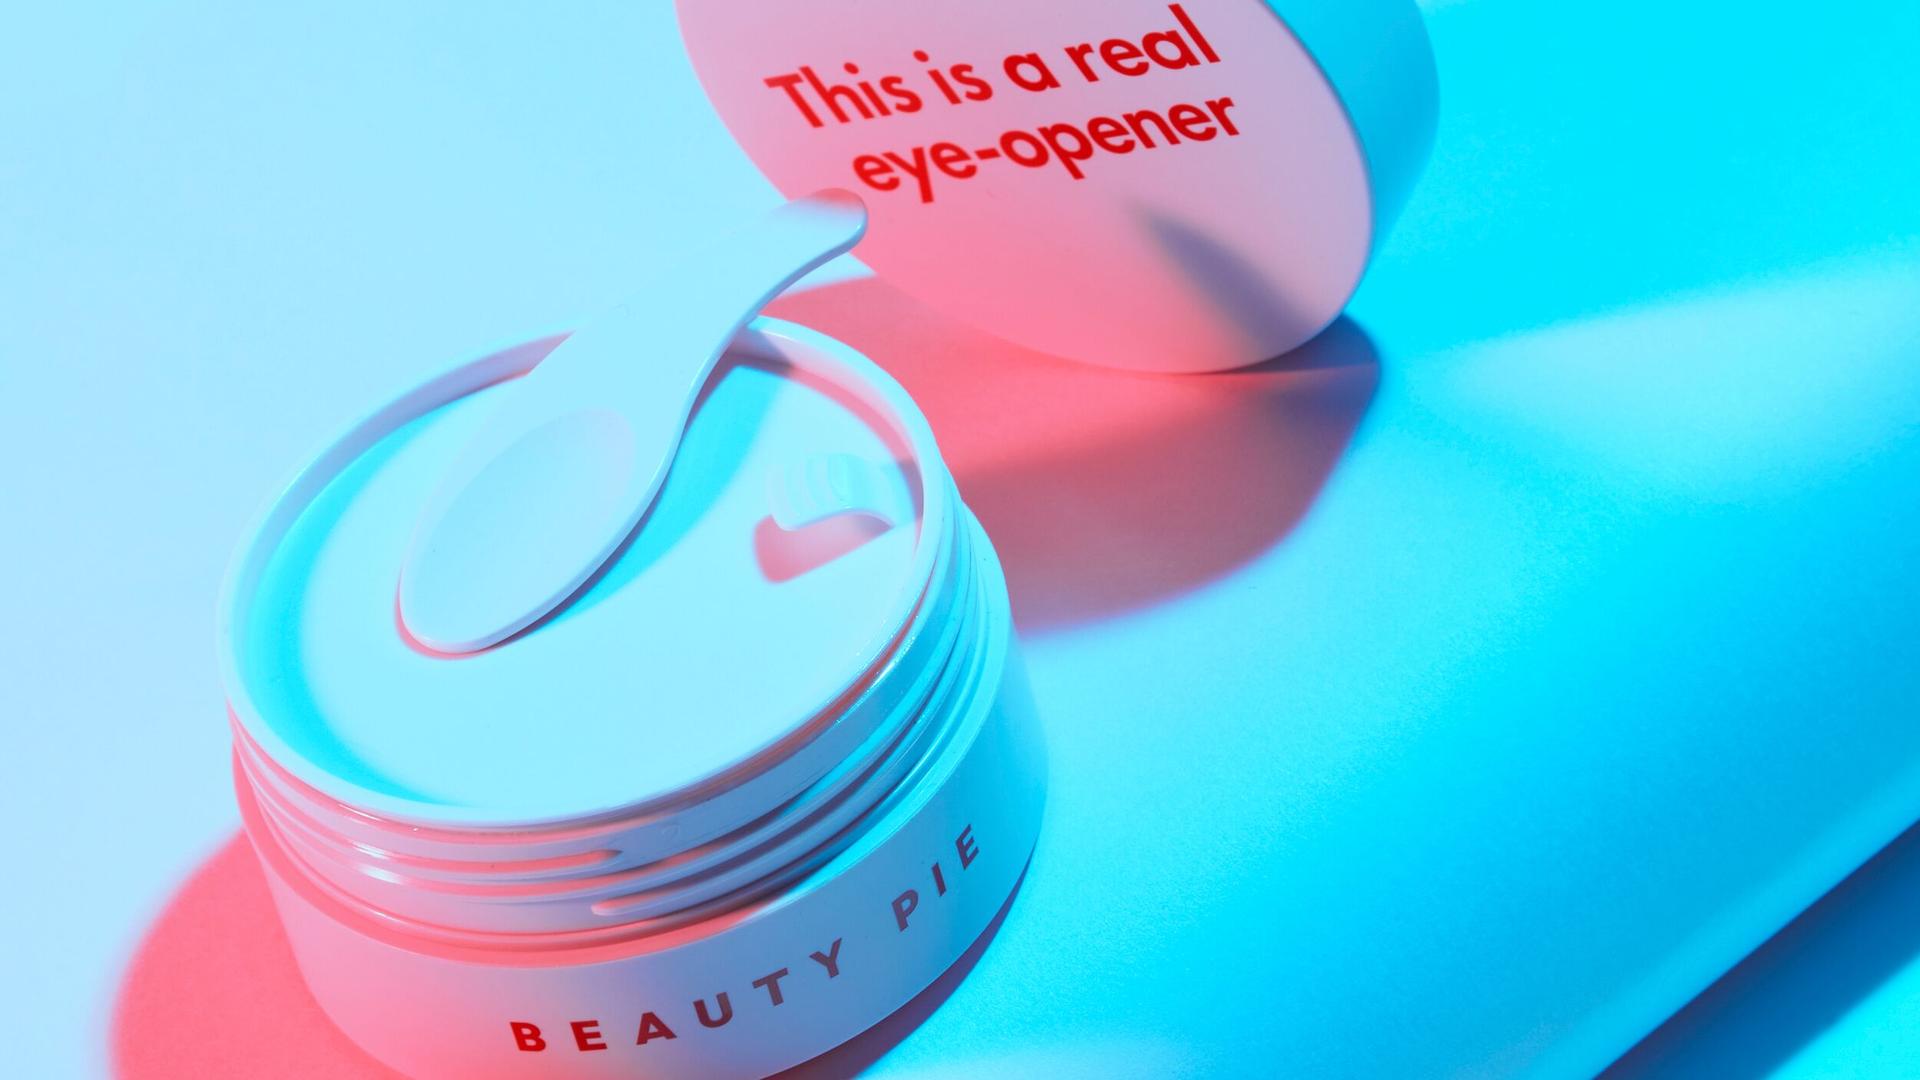 Re: Finding a new Lip stick! - Beauty Insider Community